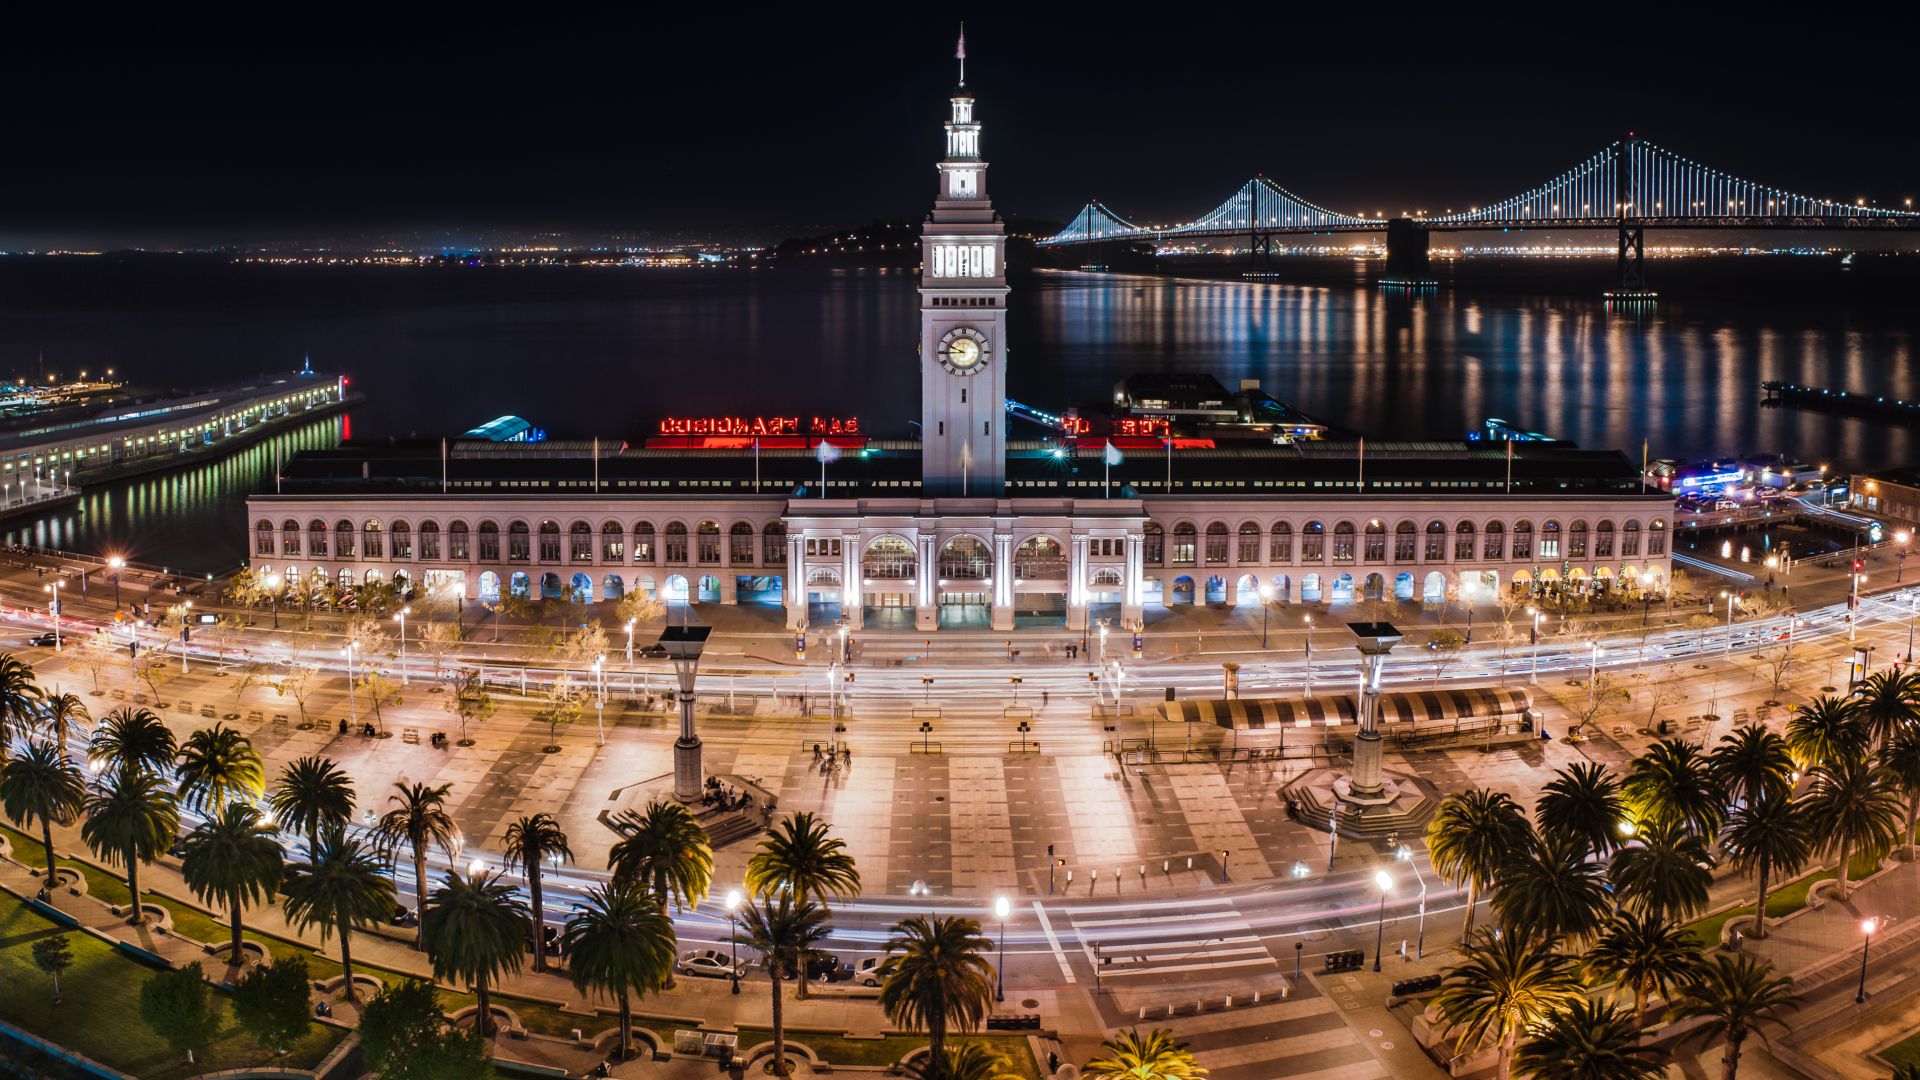 Ферри билдинг, Сан Франциско, Калифорния, США, путешествие, туризм, Ferry Building, San Francisco, California, USA, travel, tourism (horizontal)